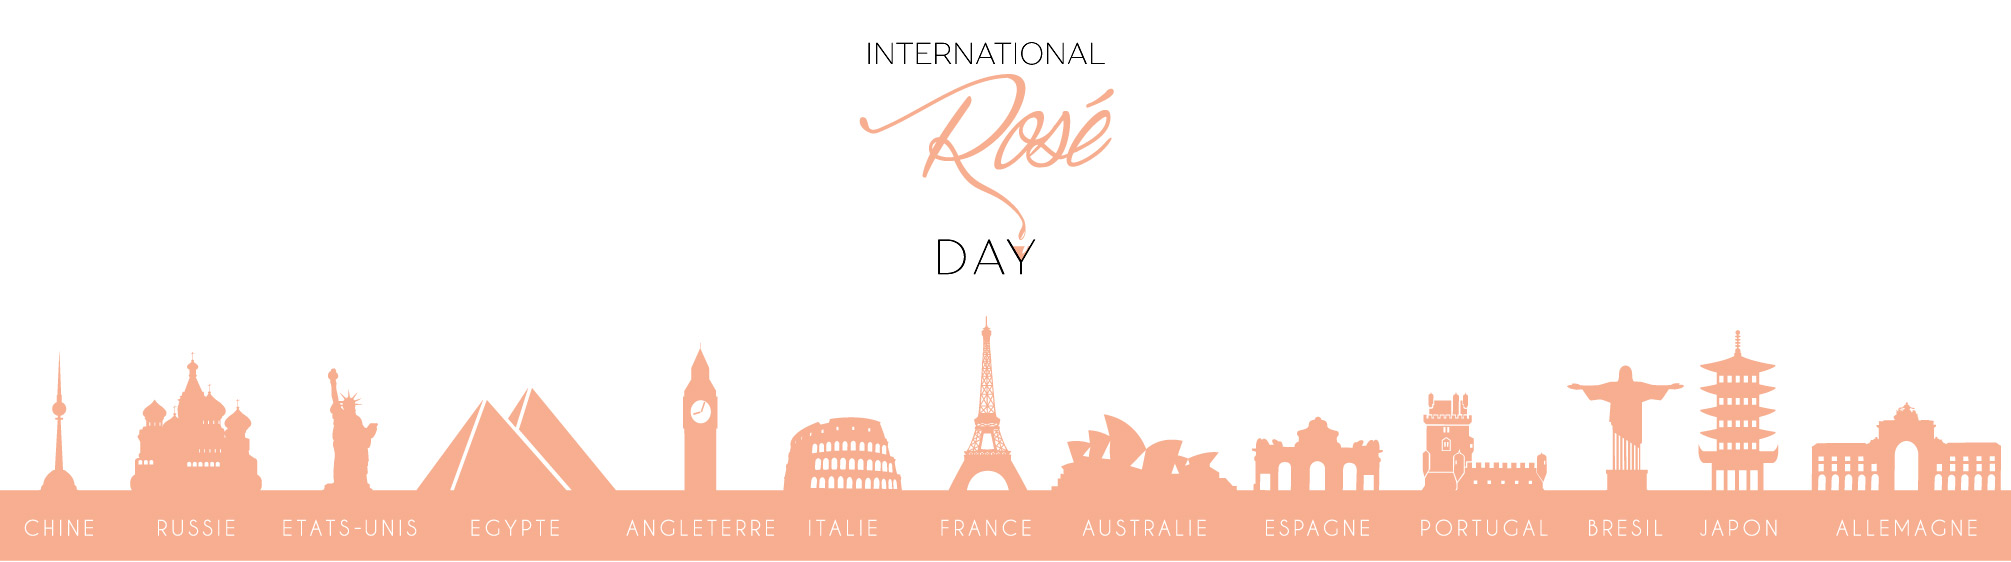 first international rose day 2018